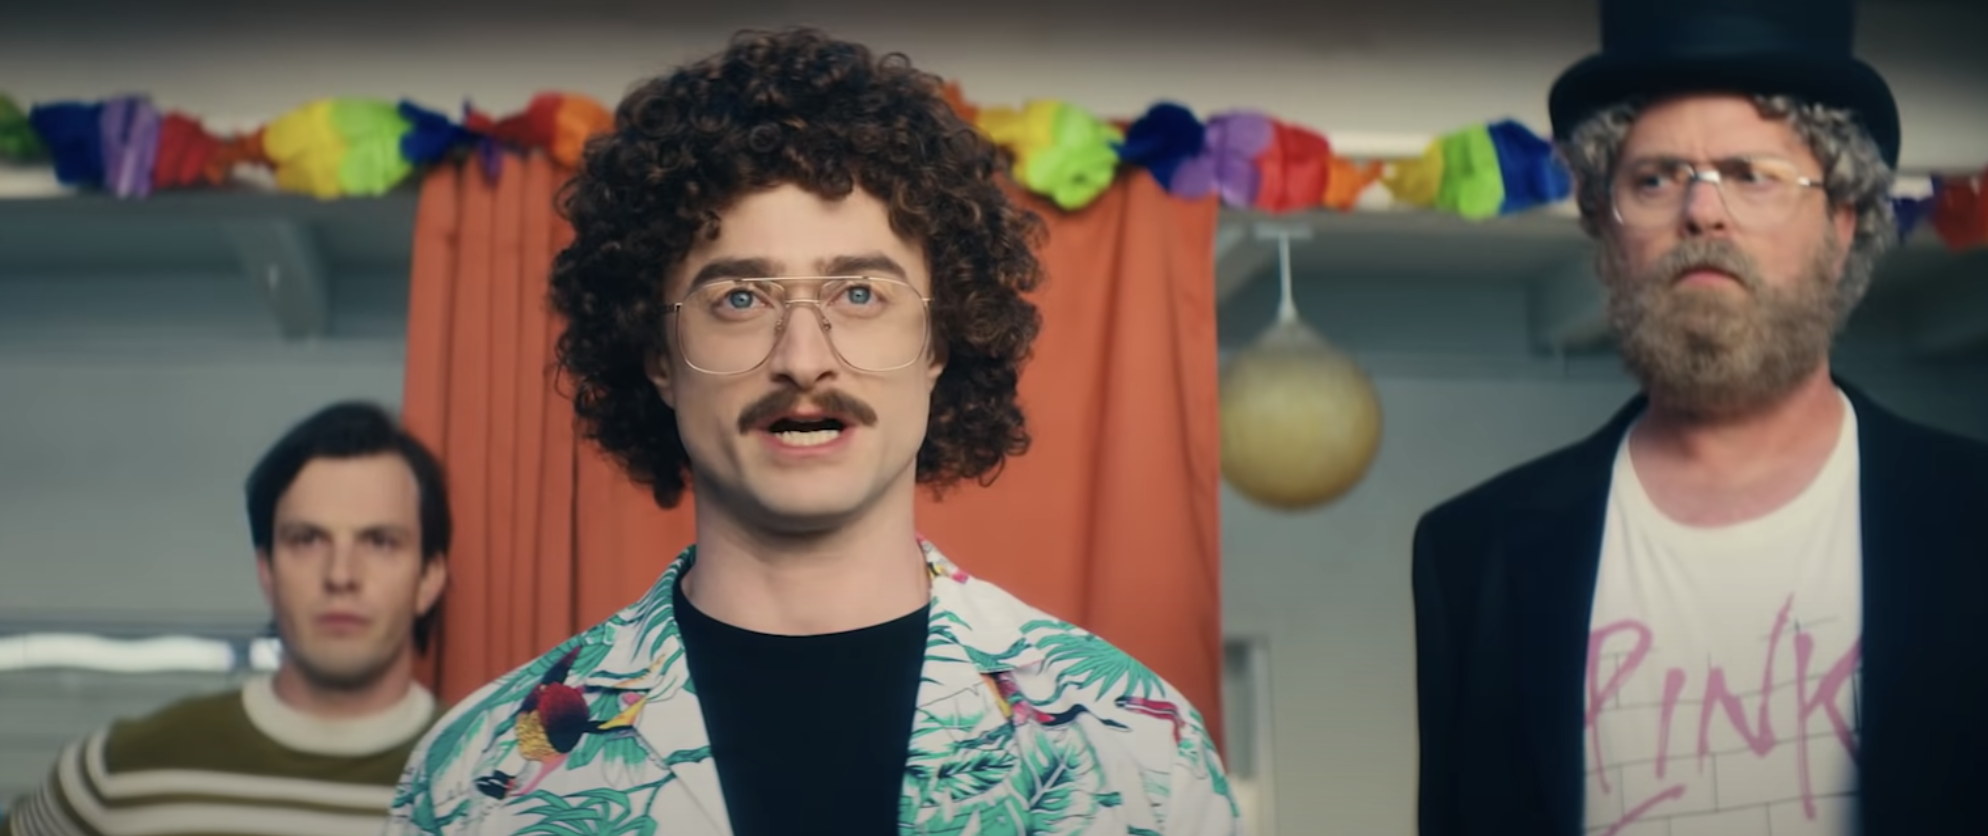 Daniel Radcliffe Shines as Weird Al Yankovic in Biopic Trailer